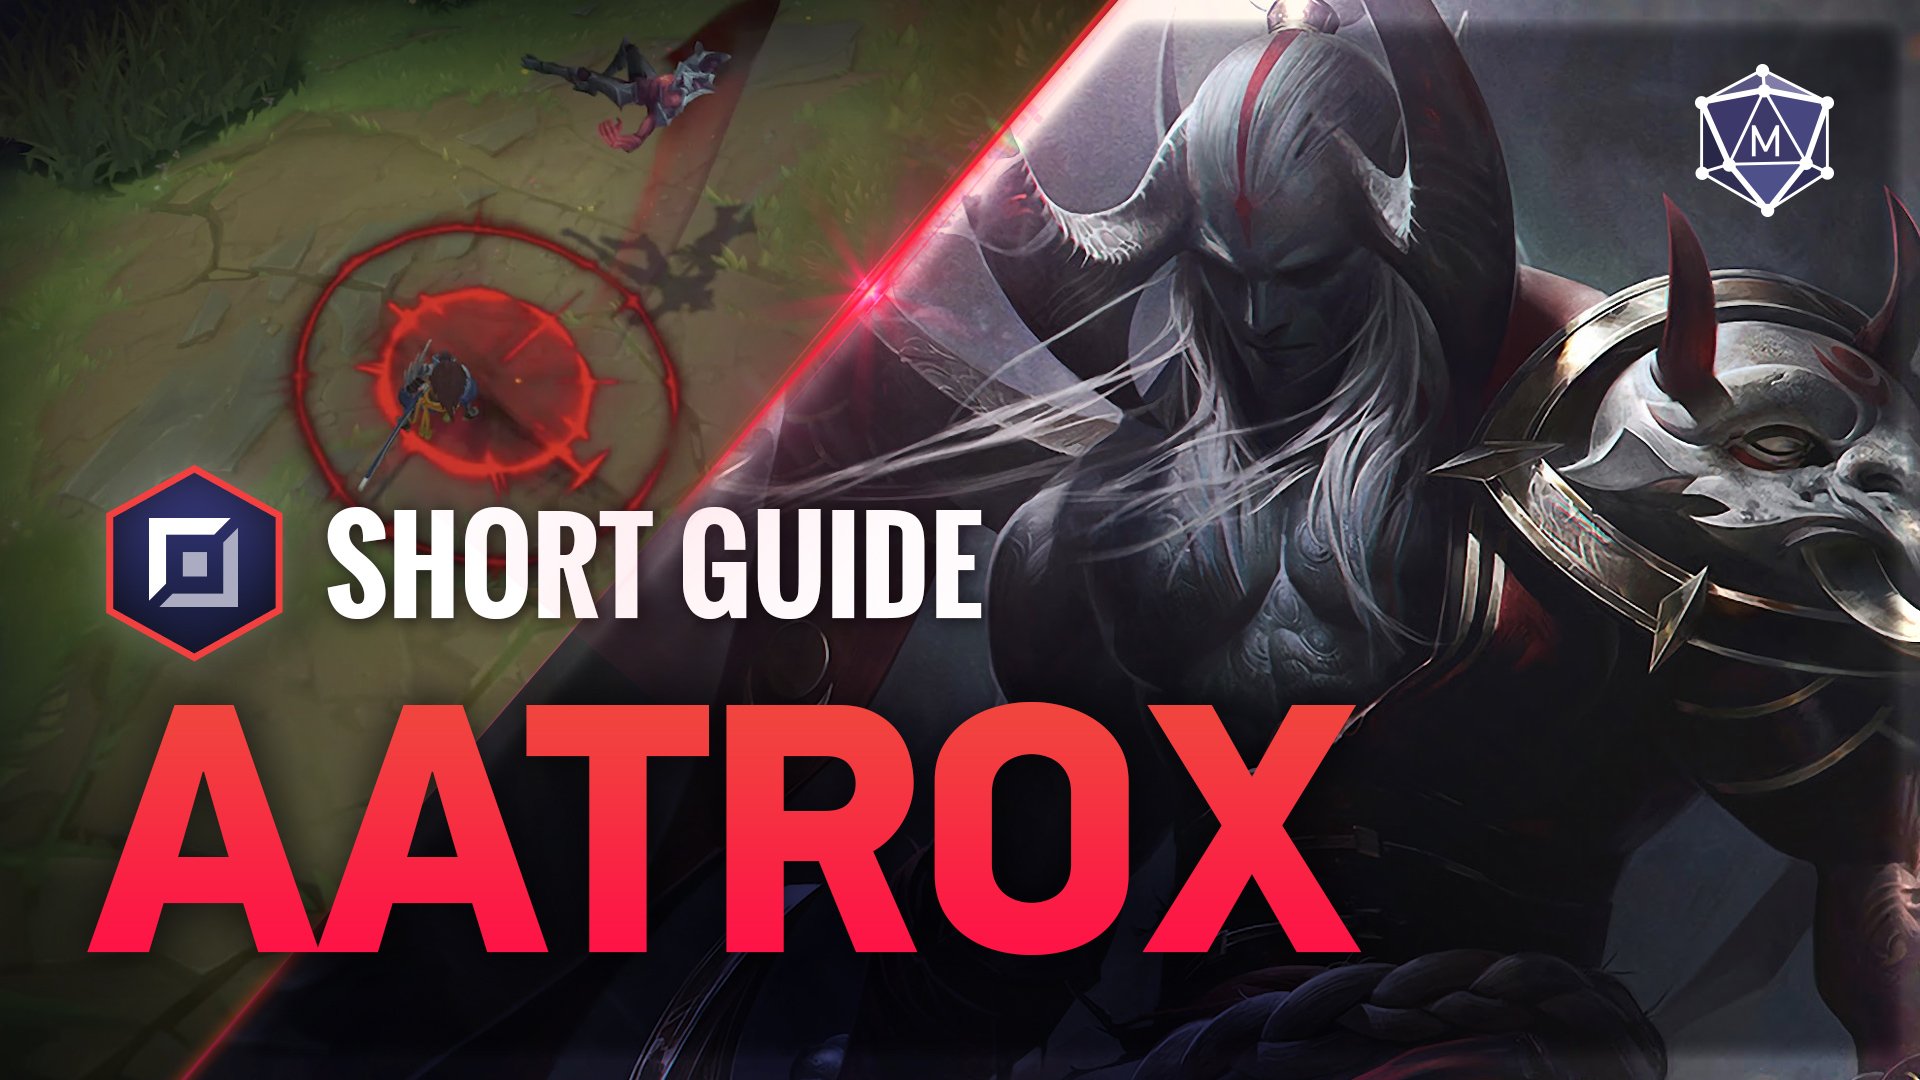 Aatrox expert guide